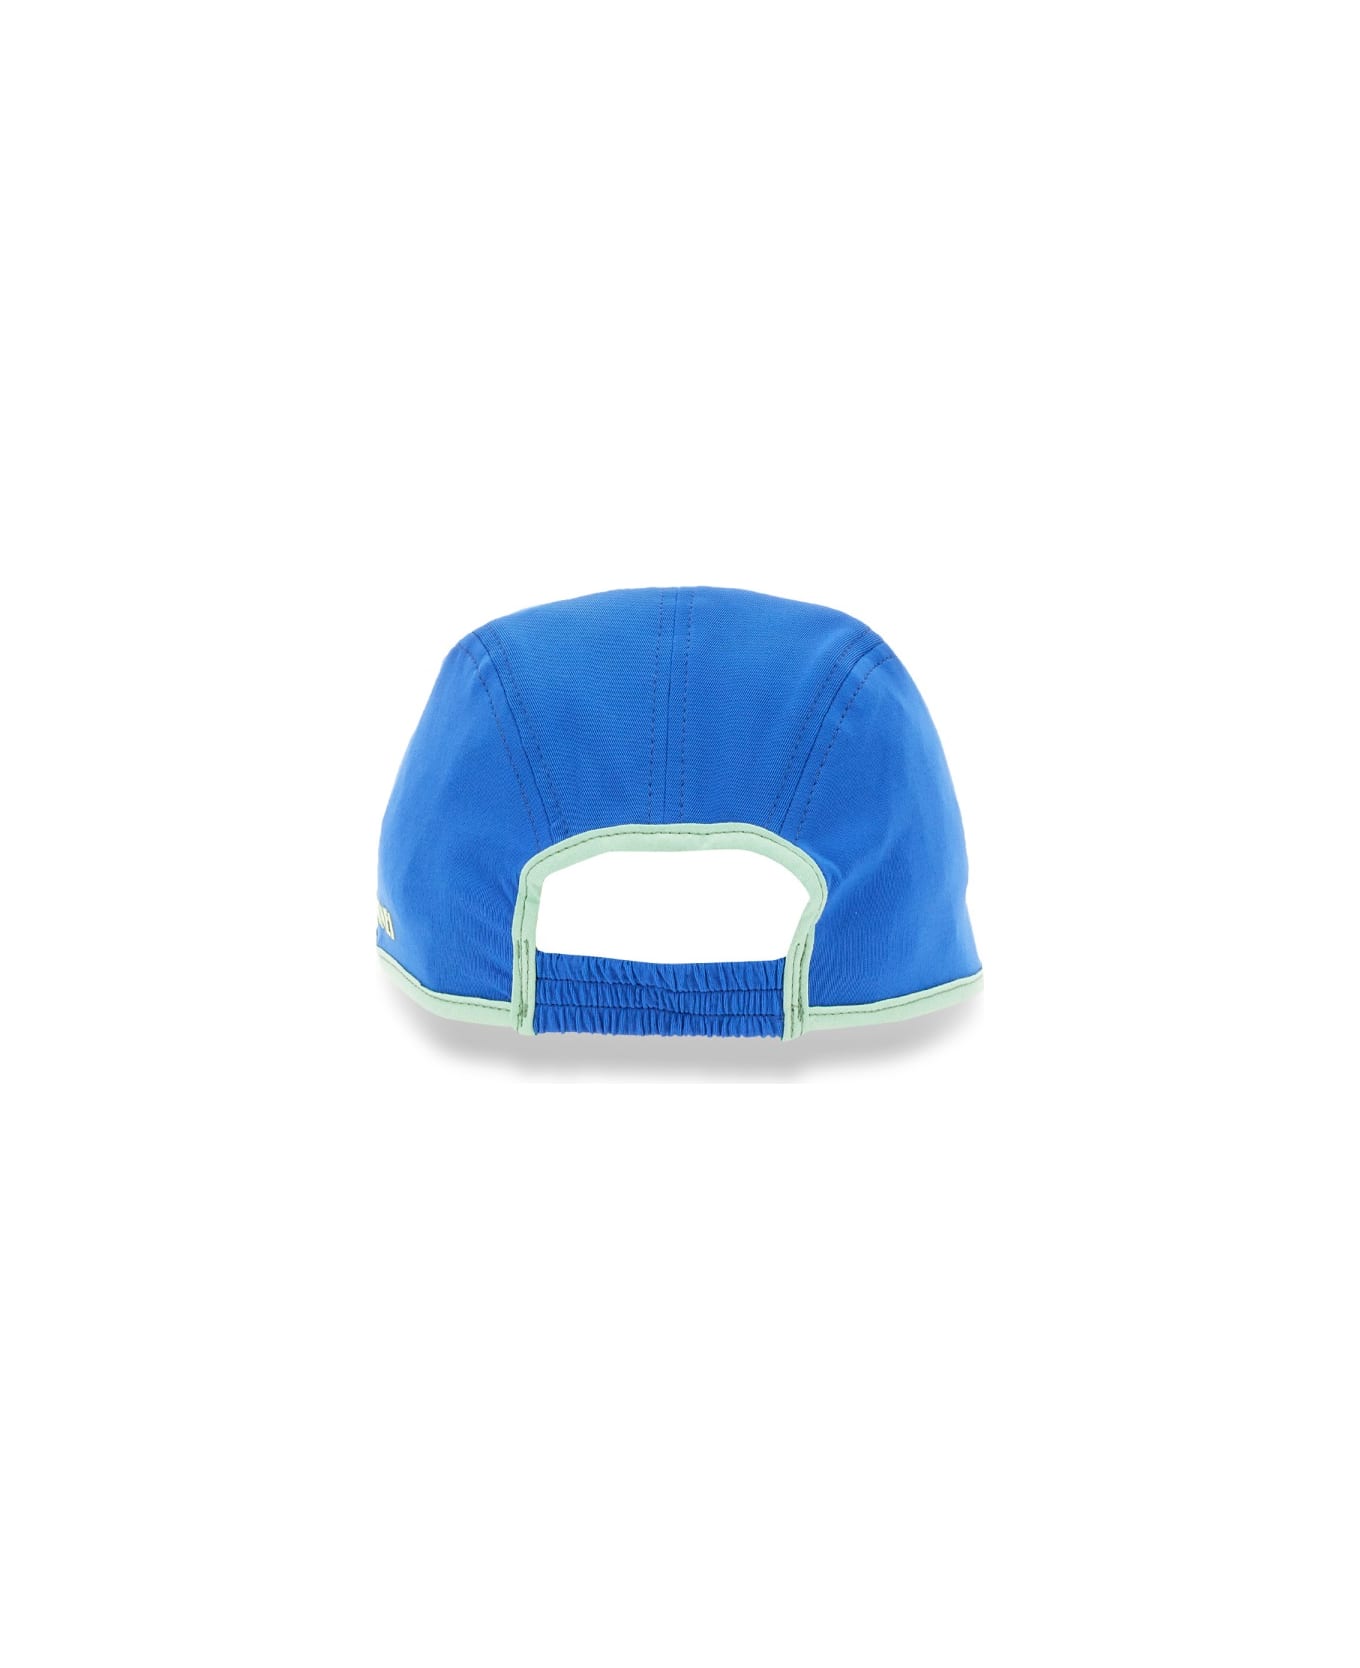 Sunnei Hat With Visor - BLUE 帽子